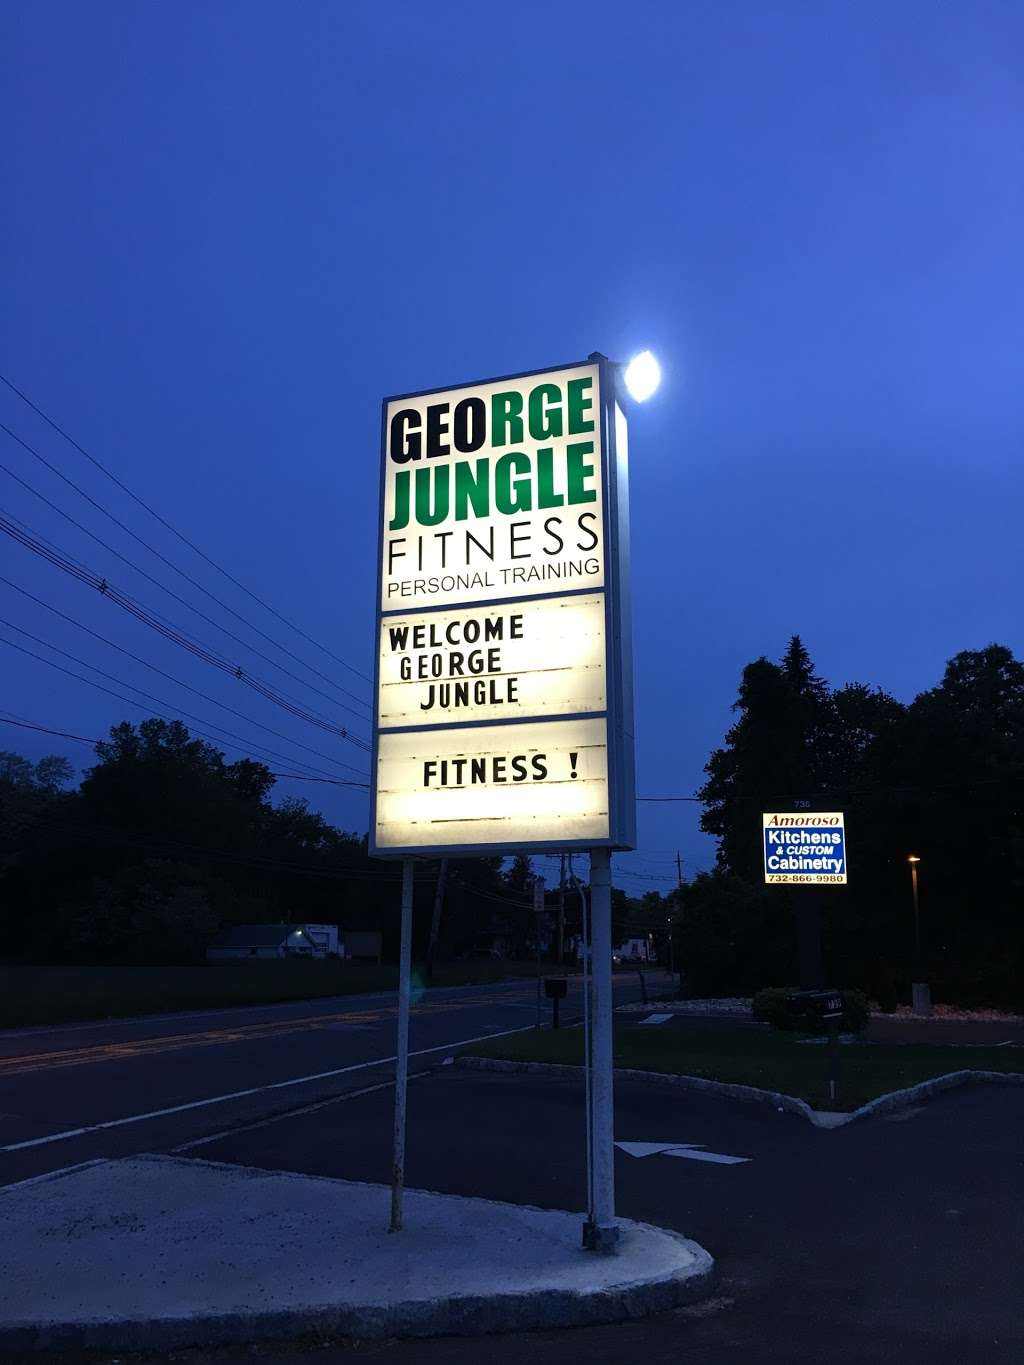 Jungle Fitness: Personal Training | 739 Park Ave, Freehold, NJ 07728 | Phone: (732) 513-2866